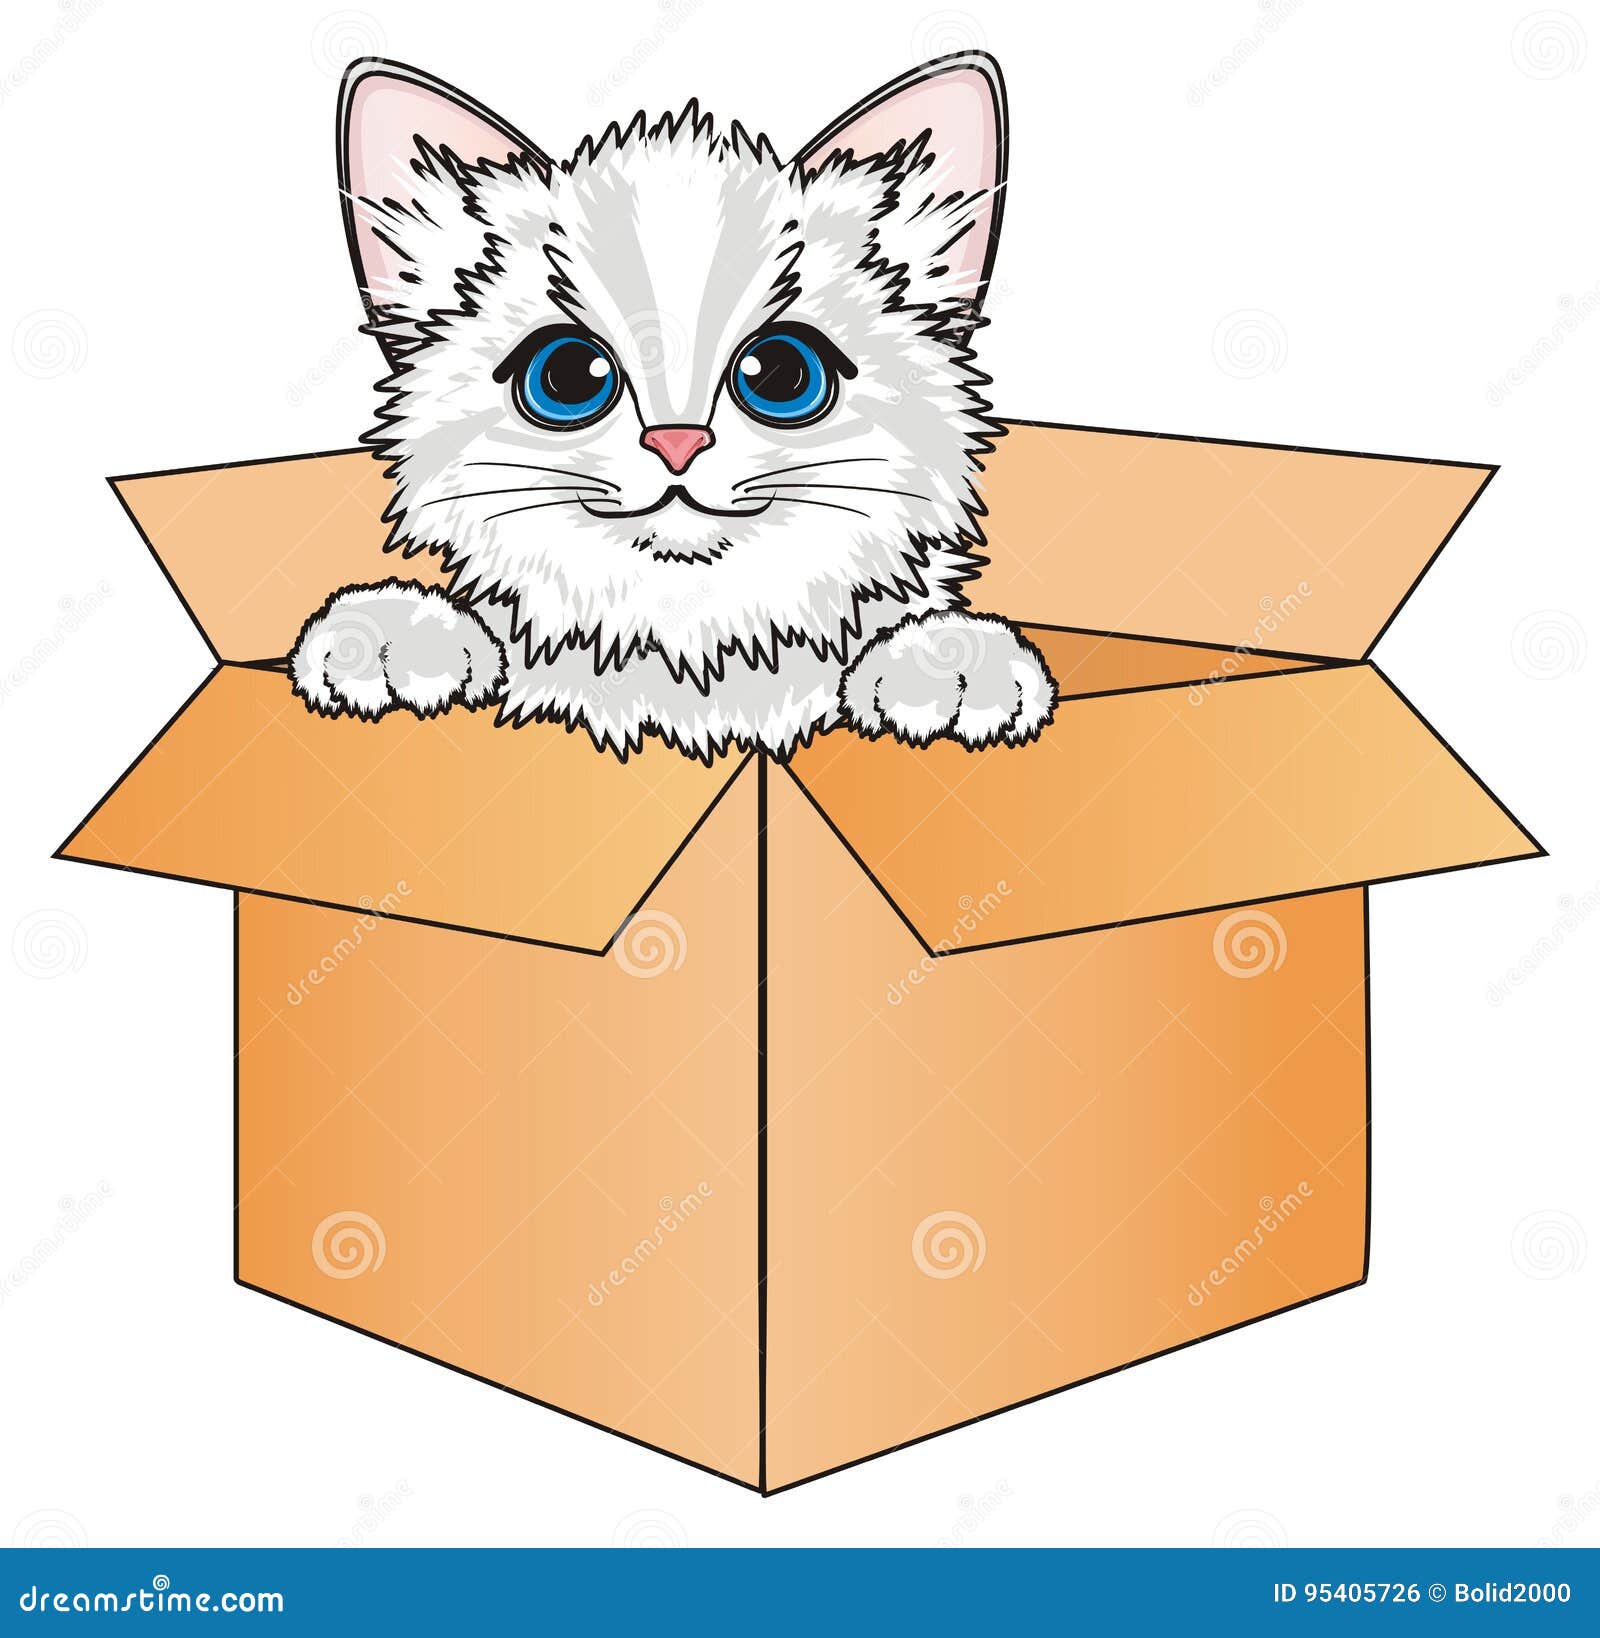 Cat Paper Object Stock Illustrations - 975 Cat Paper Object Stock Illustrat...